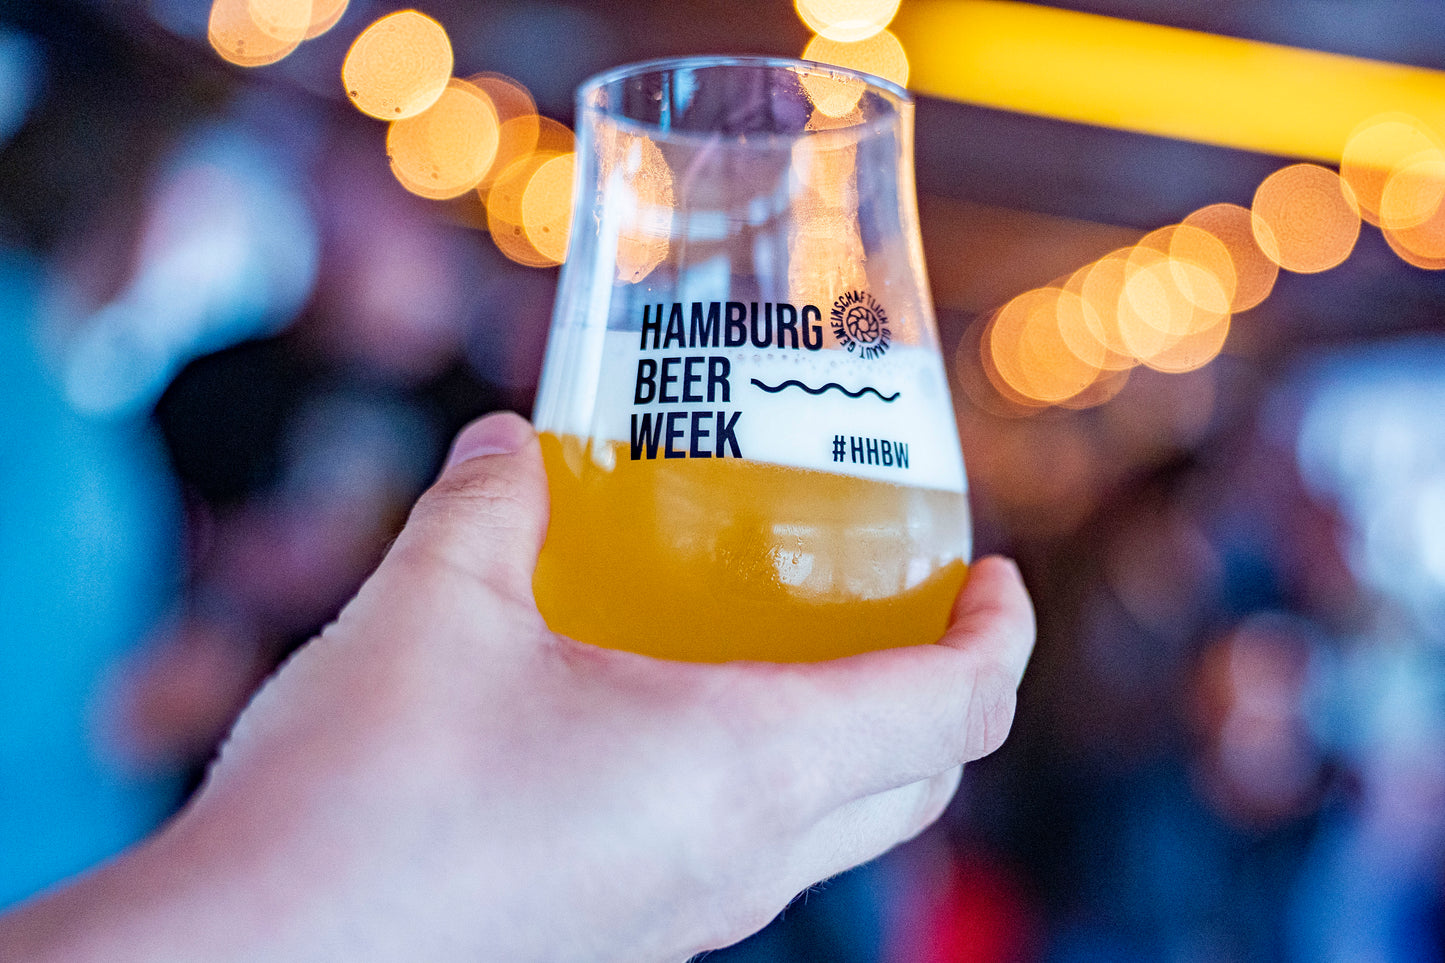 Hazy Hoppy Helles 6 Flaschen - Hamburg Beer Week 2023 - Collaboration Brew